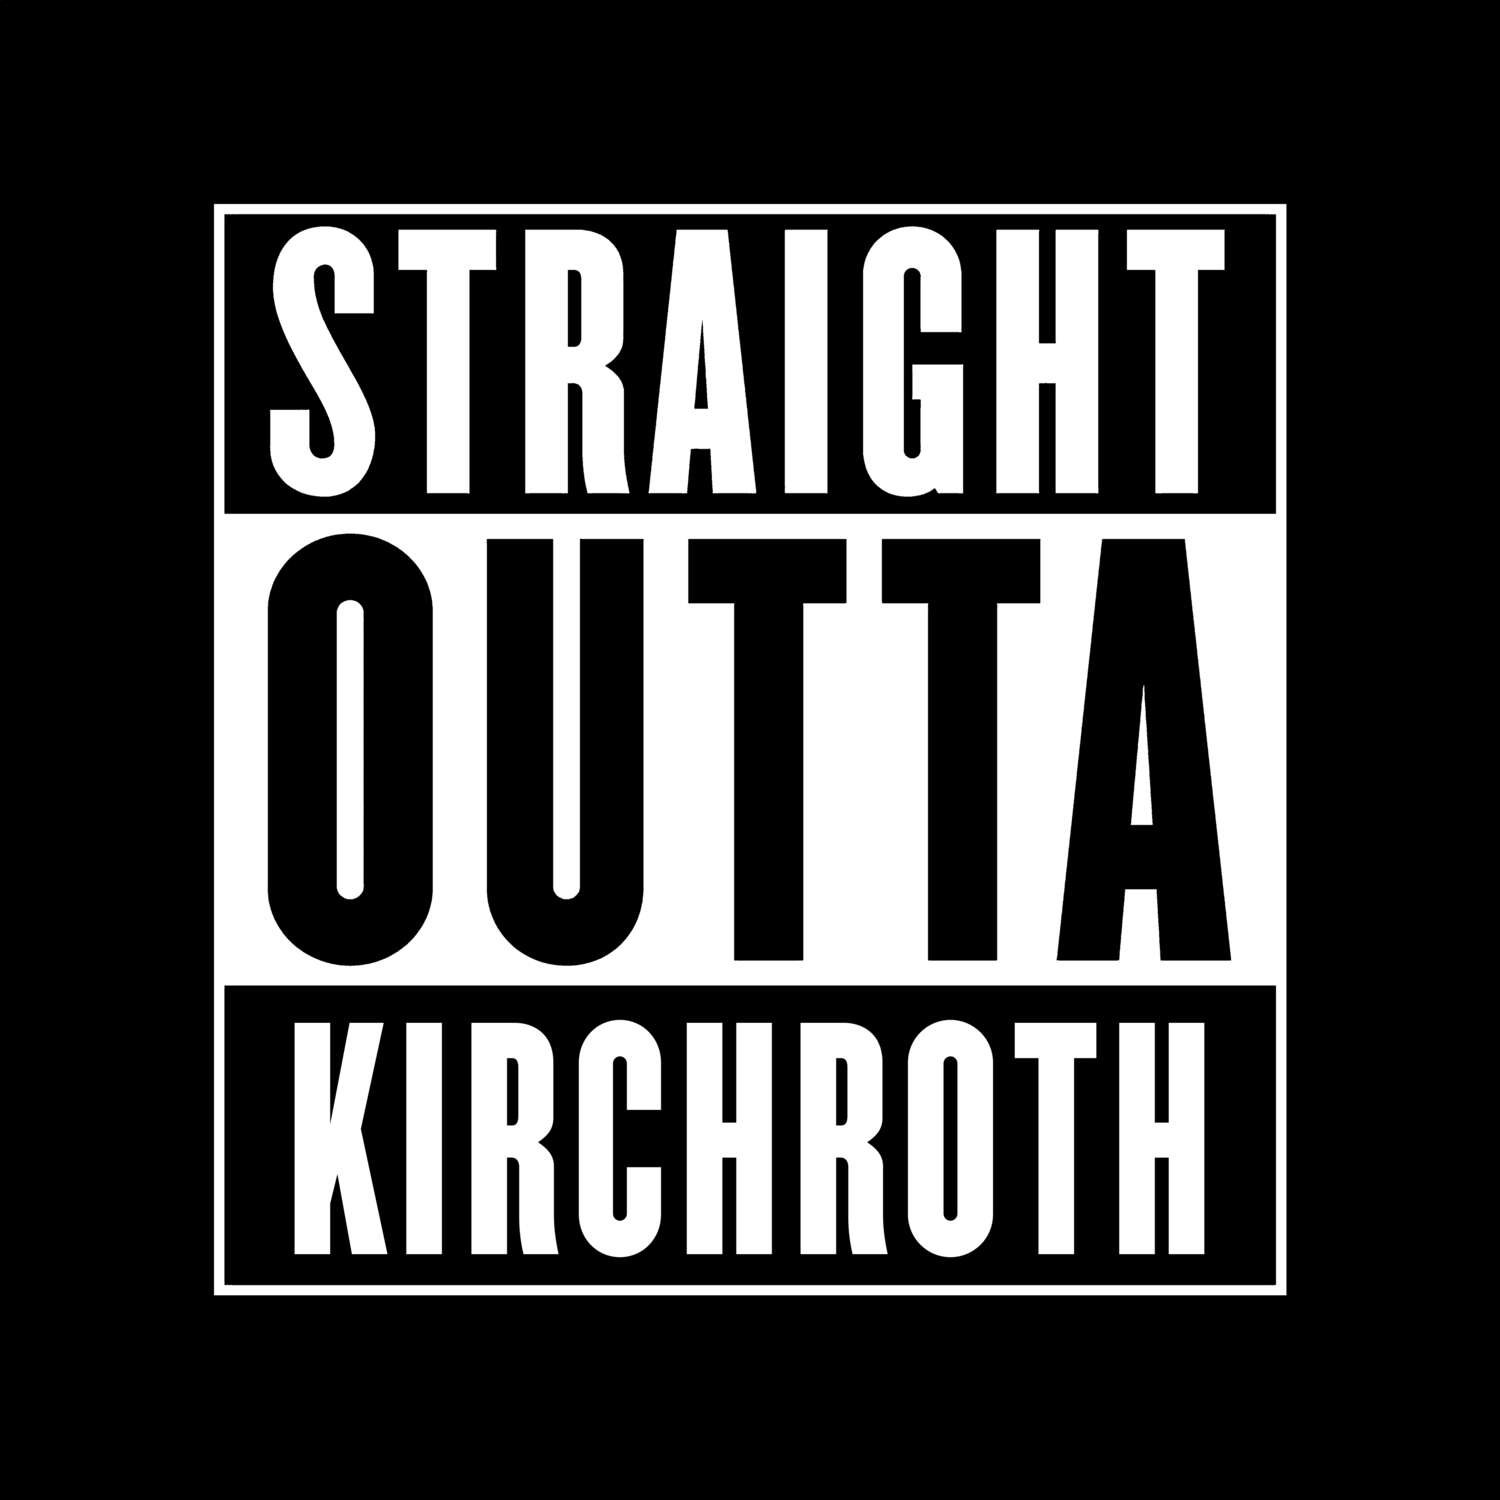 Kirchroth T-Shirt »Straight Outta«